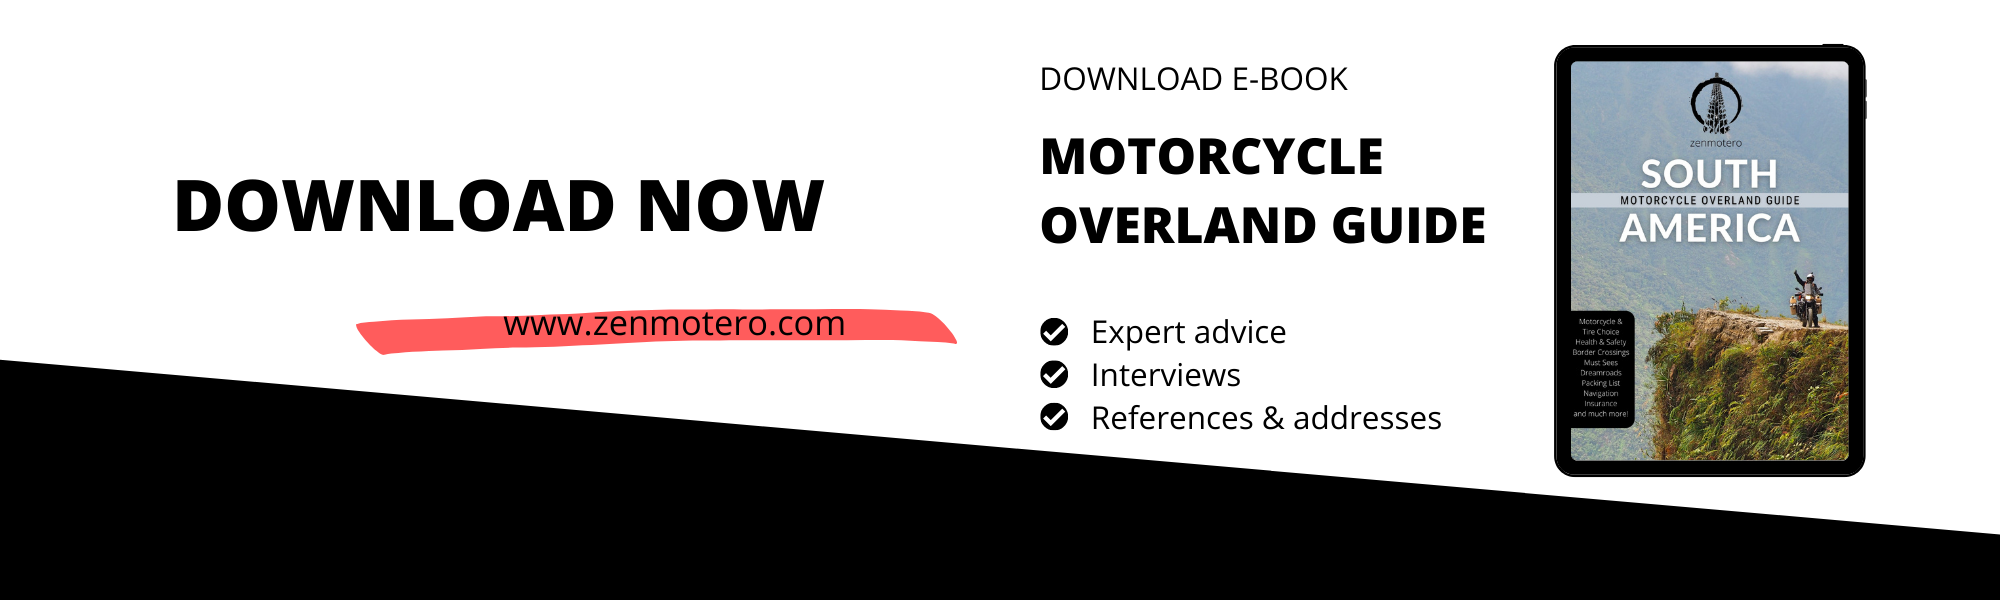 Download EBook Zenmotero Motorcycle Overland Guide South America